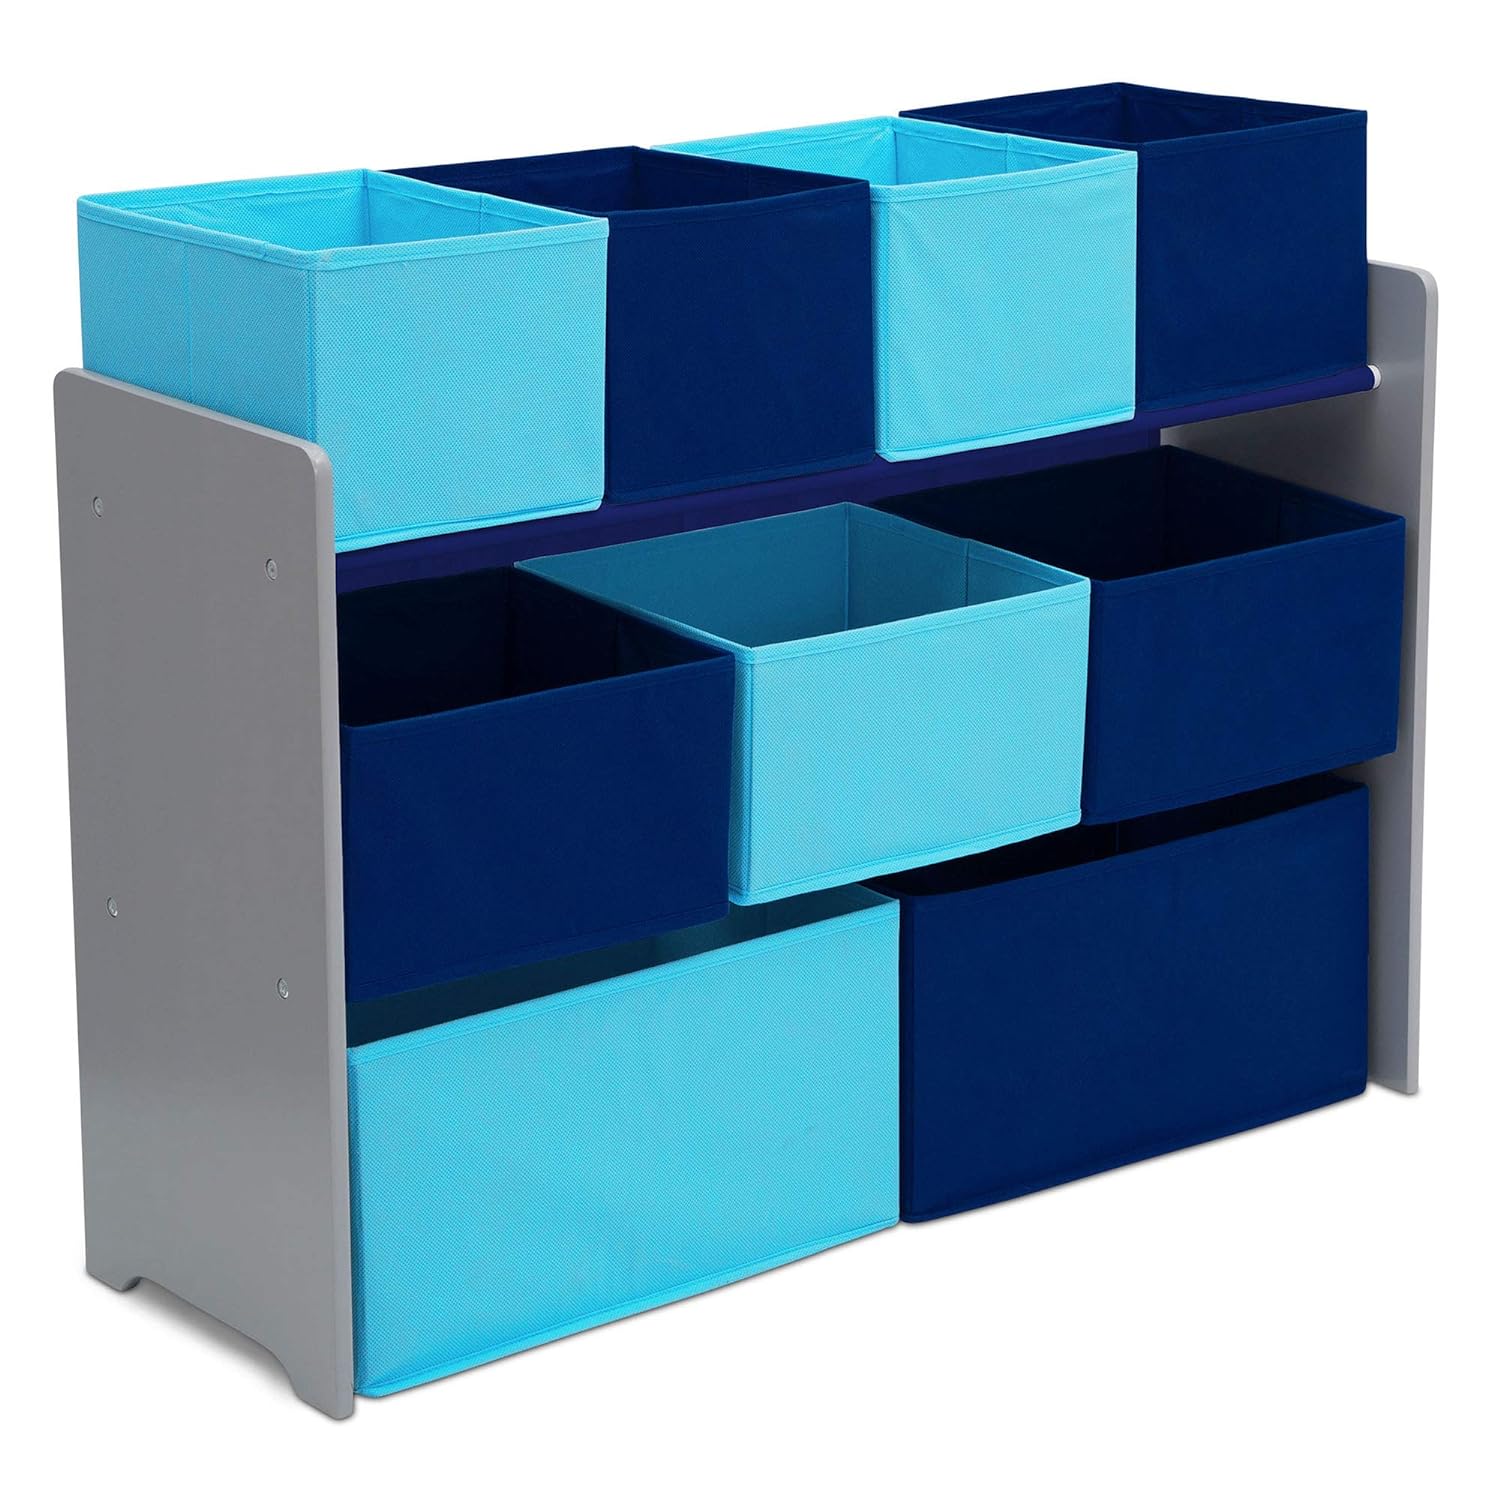 Deluxe Multi-Bin Toy Organizer with Storage Bins - Greenguard Gold Certified, Grey/Blue Bins